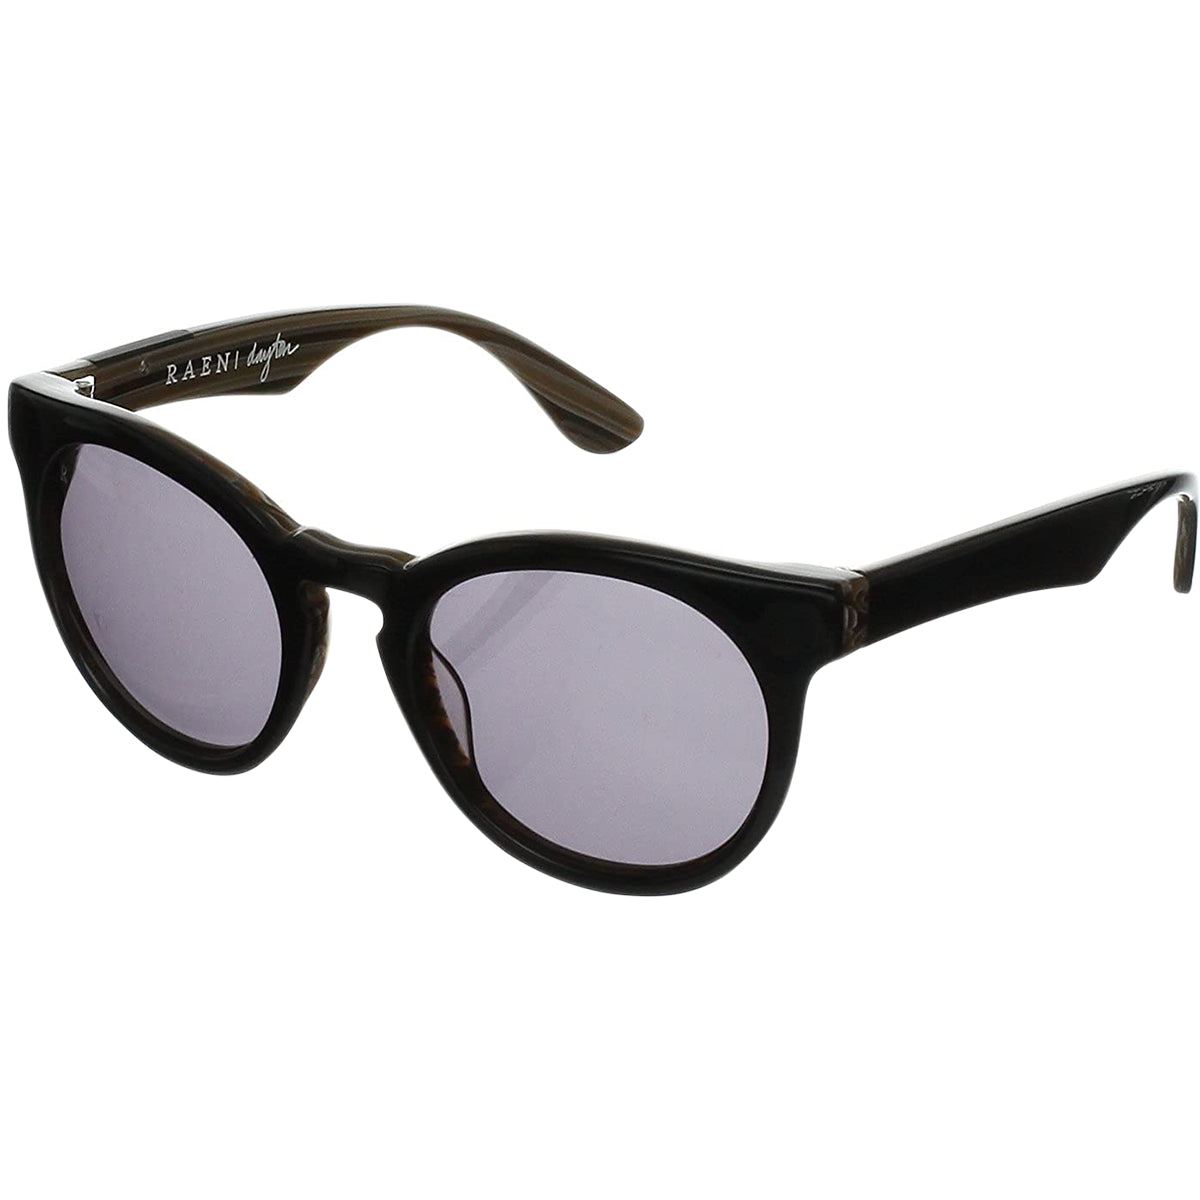 Raen Dayton Men's Lifestyle Sunglasses-DAY-021-SMK-WDGRN